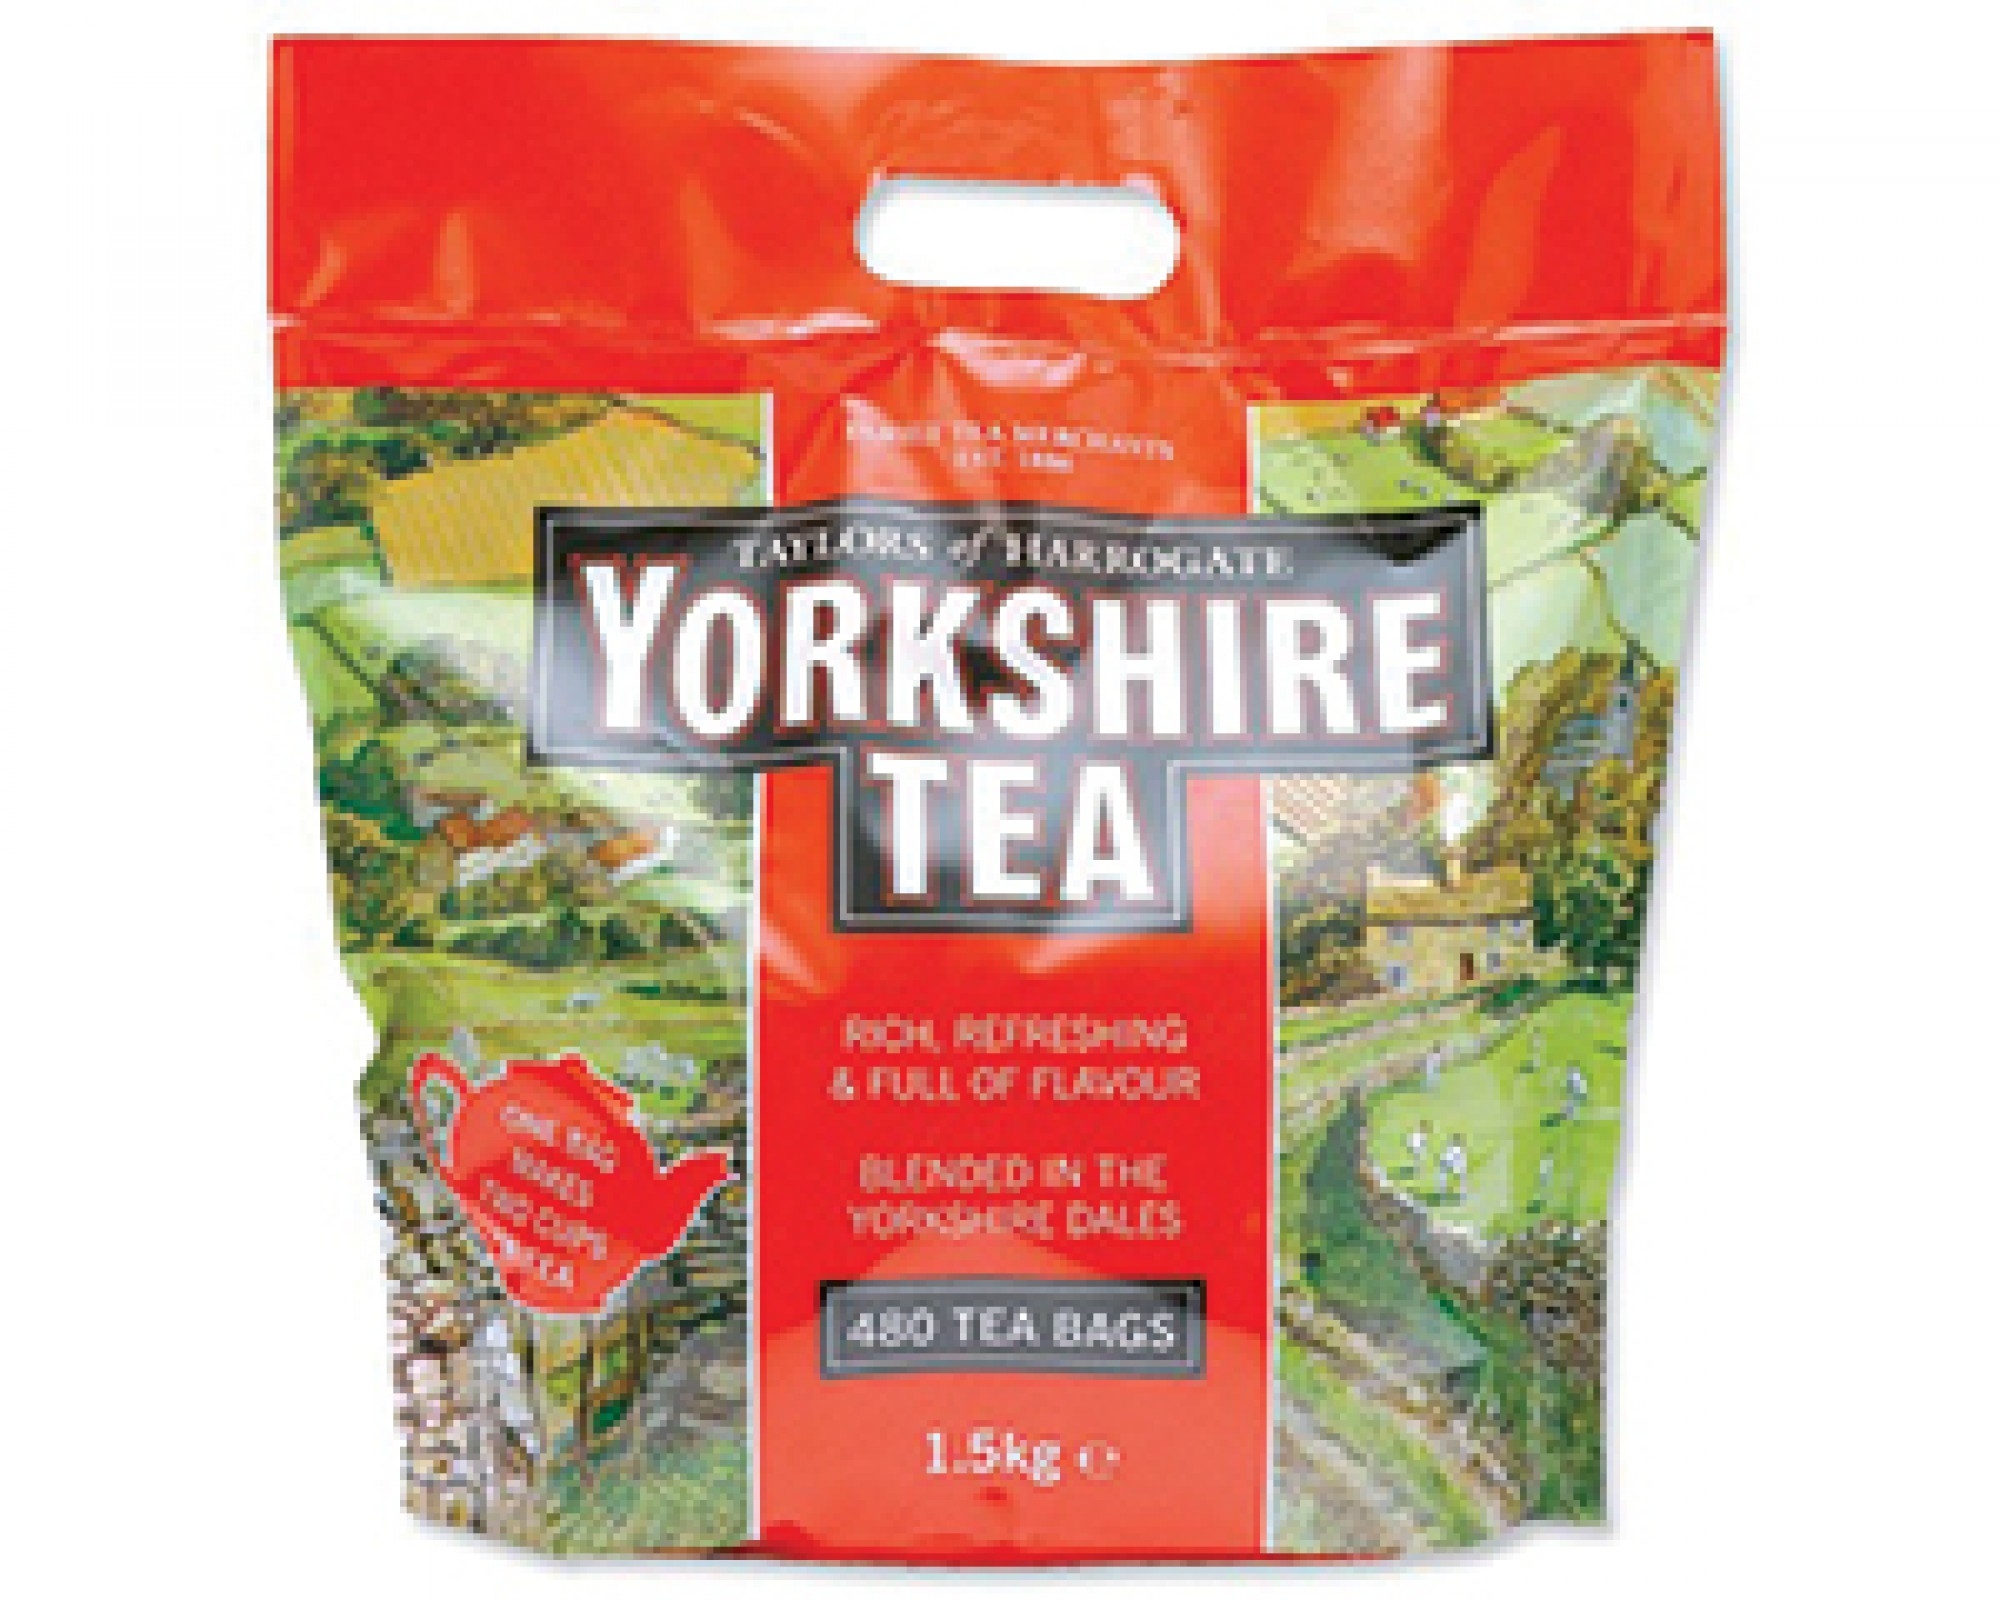 Yorkshire Tea 480 Bags